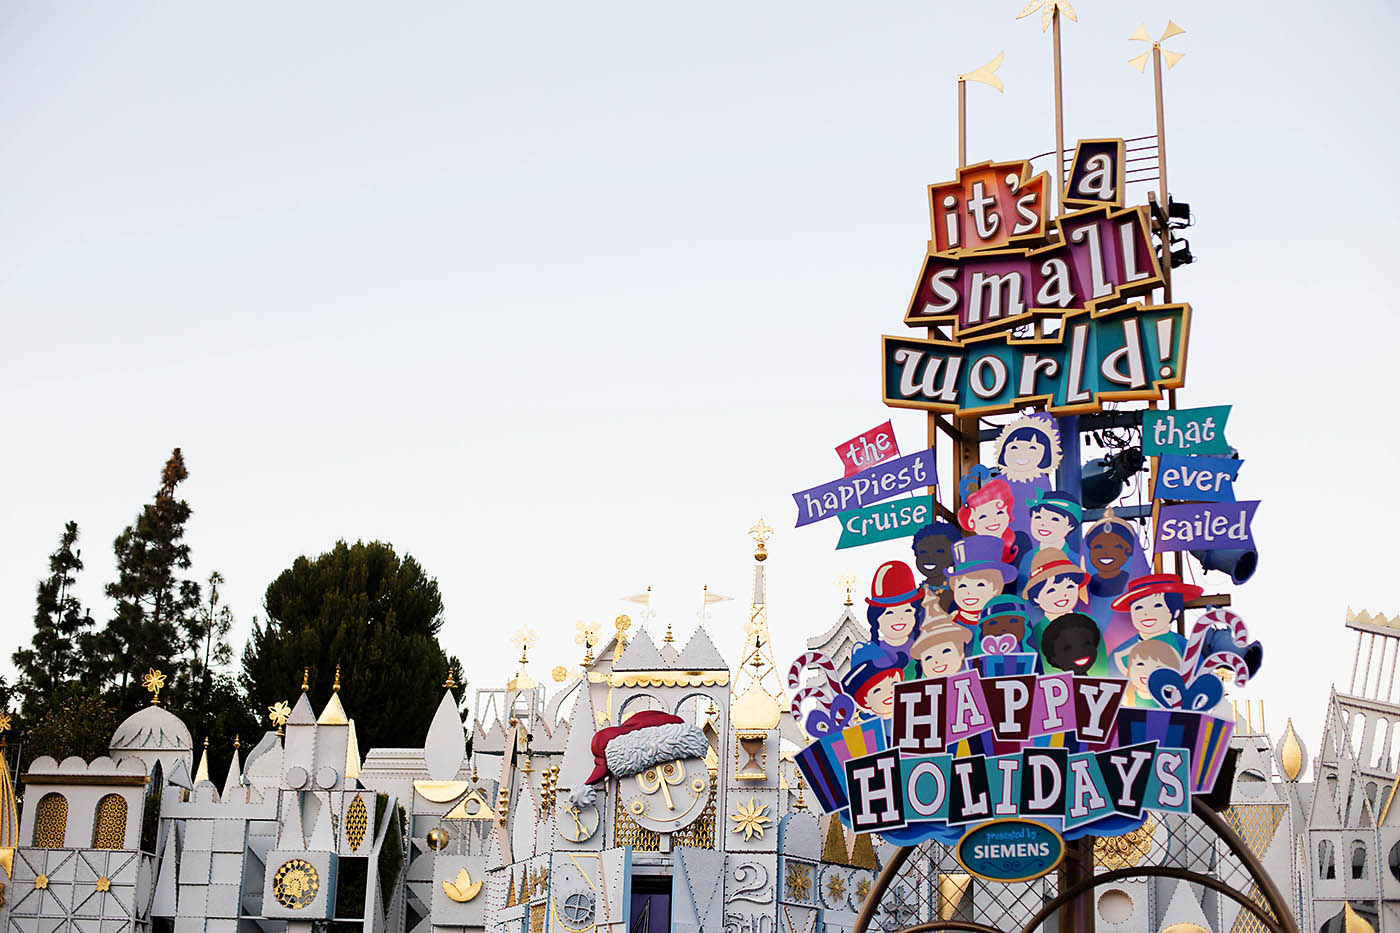 Disneyland Holidays and Season of the Force